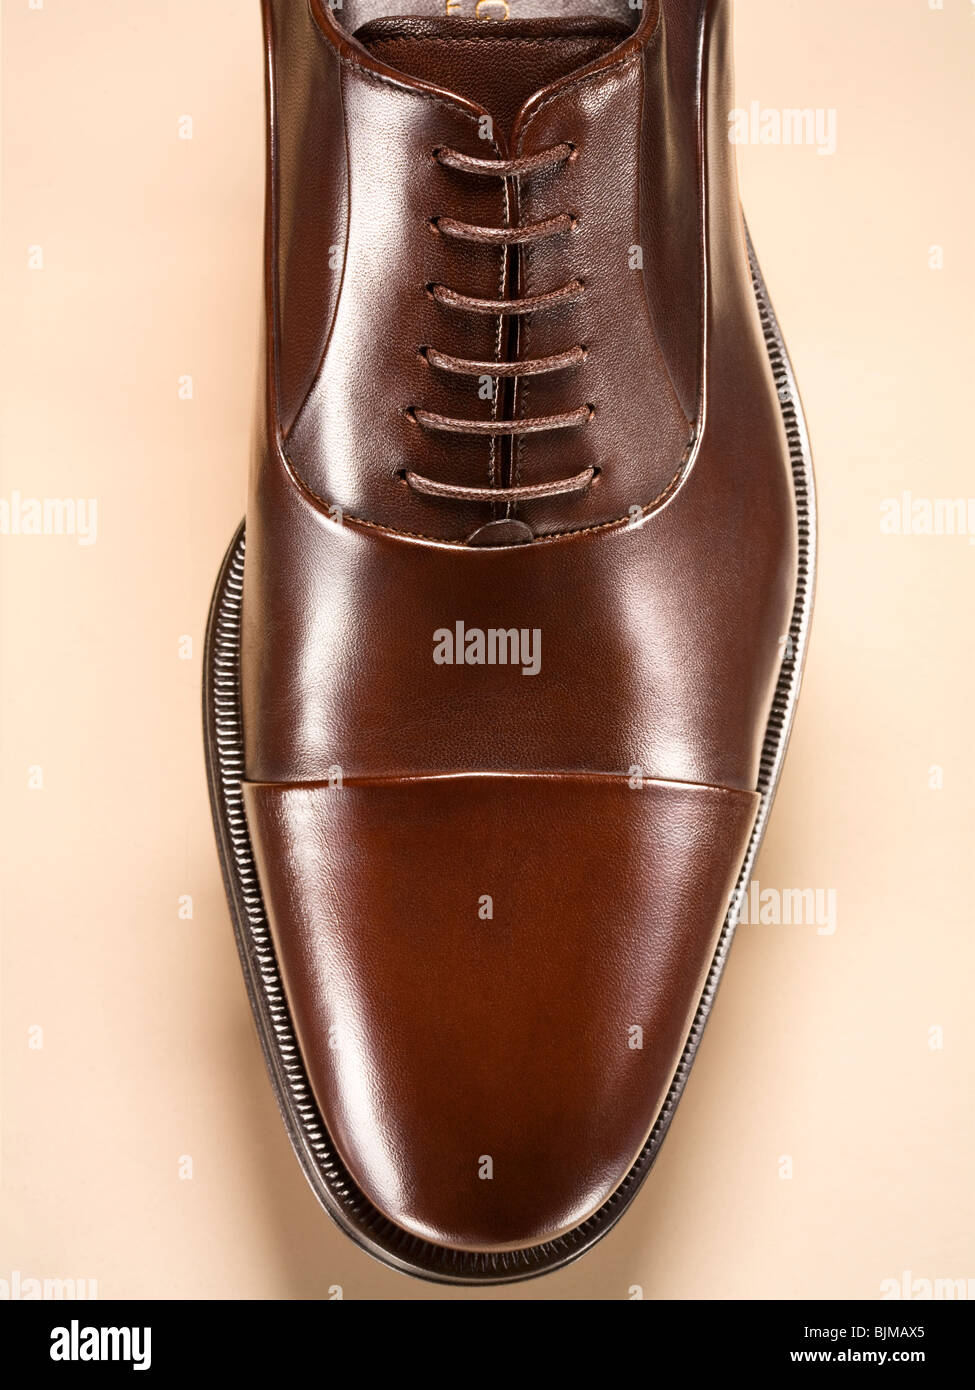 Brown men's shoe. Bruno Magli men's leather shoe Stock Photo - Alamy